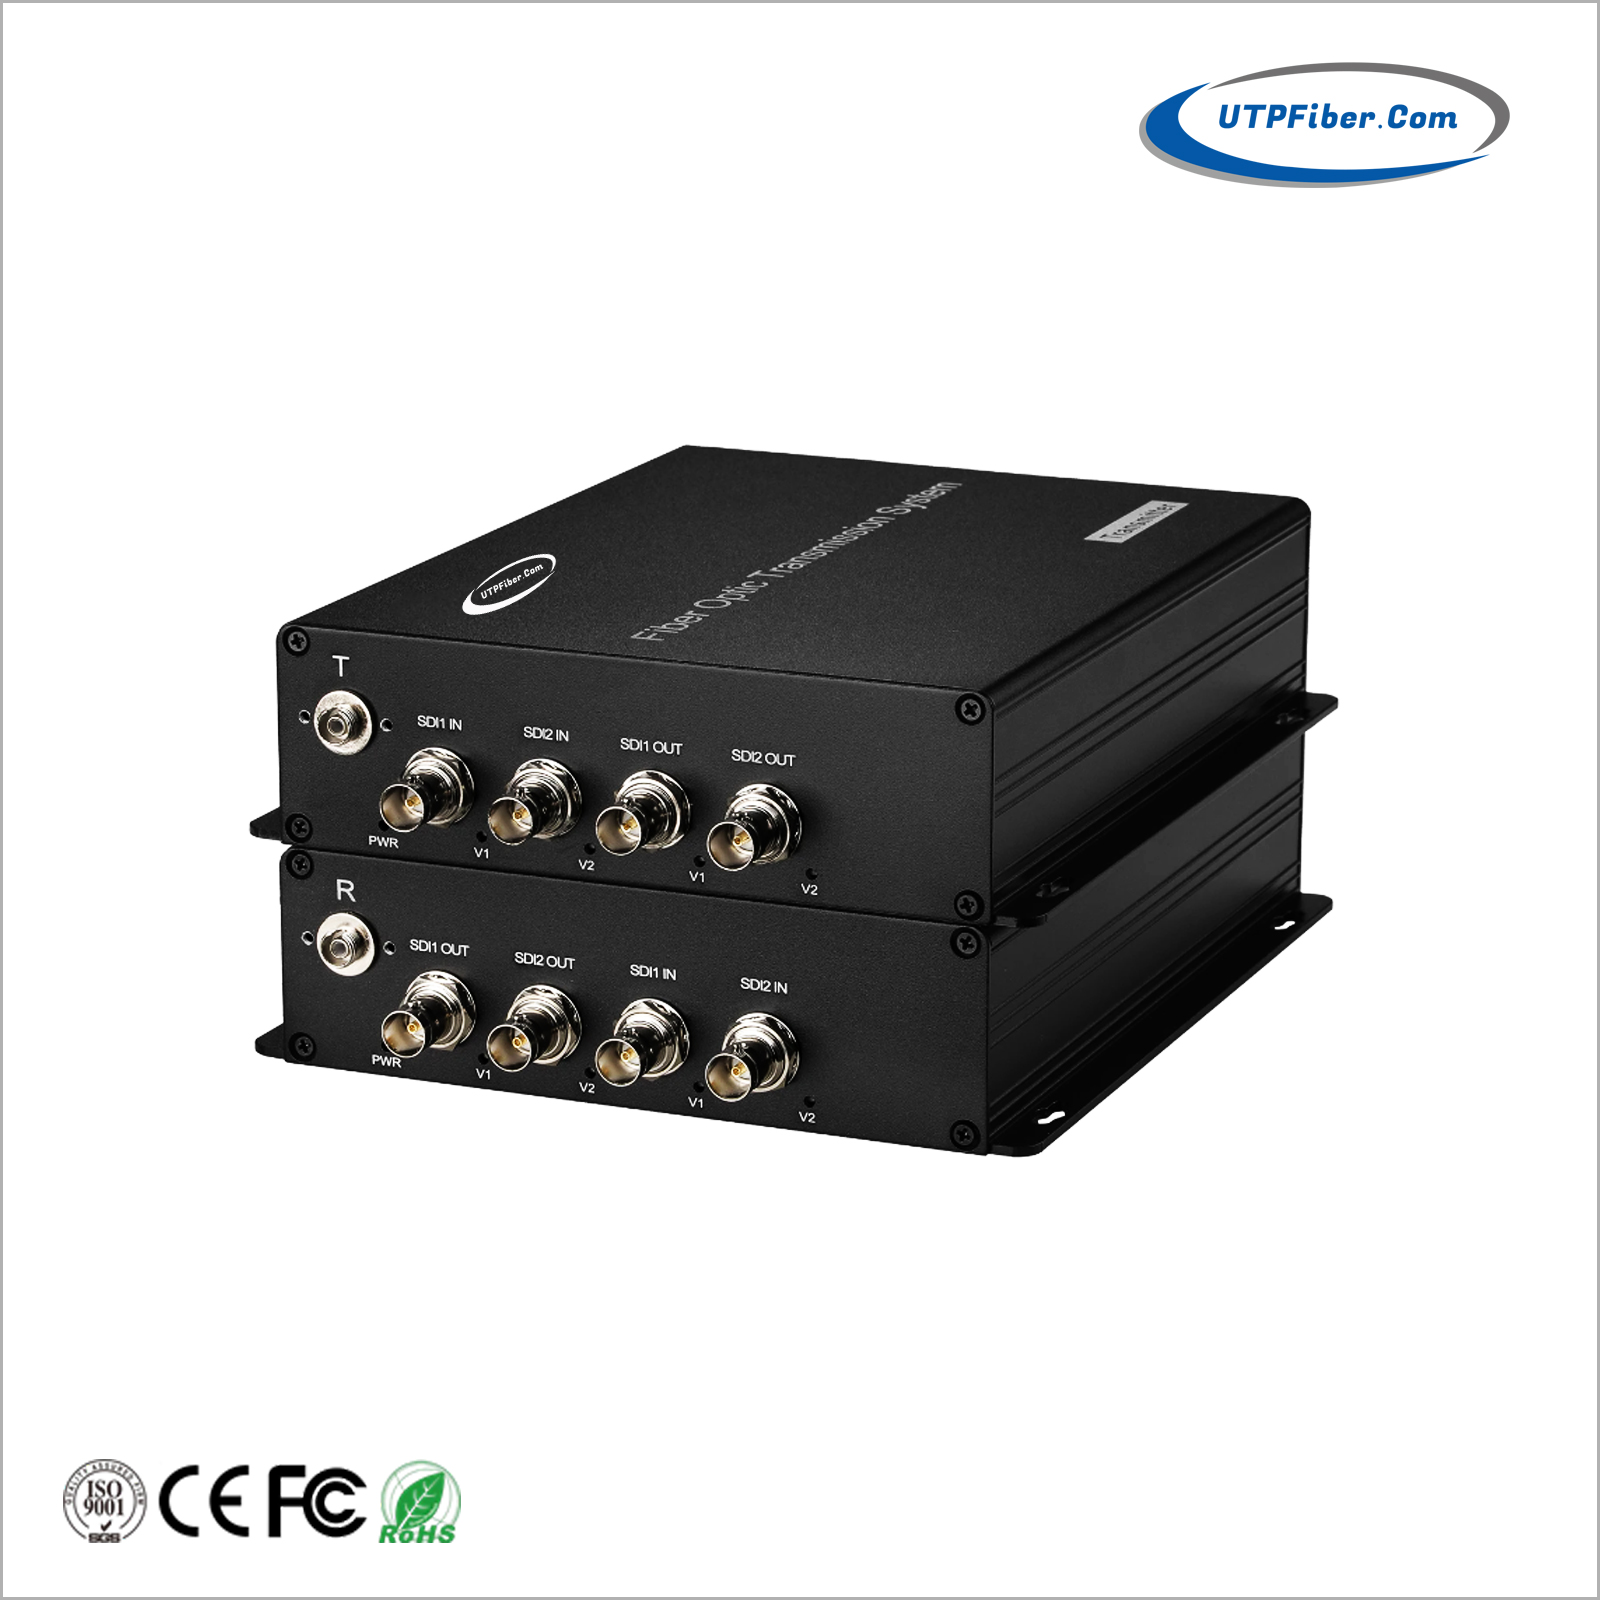 2-Channel Bi-Directional 3G/HD/SD-SDI over 1 Fiber Optic Extender, Single-Mode up 20Km